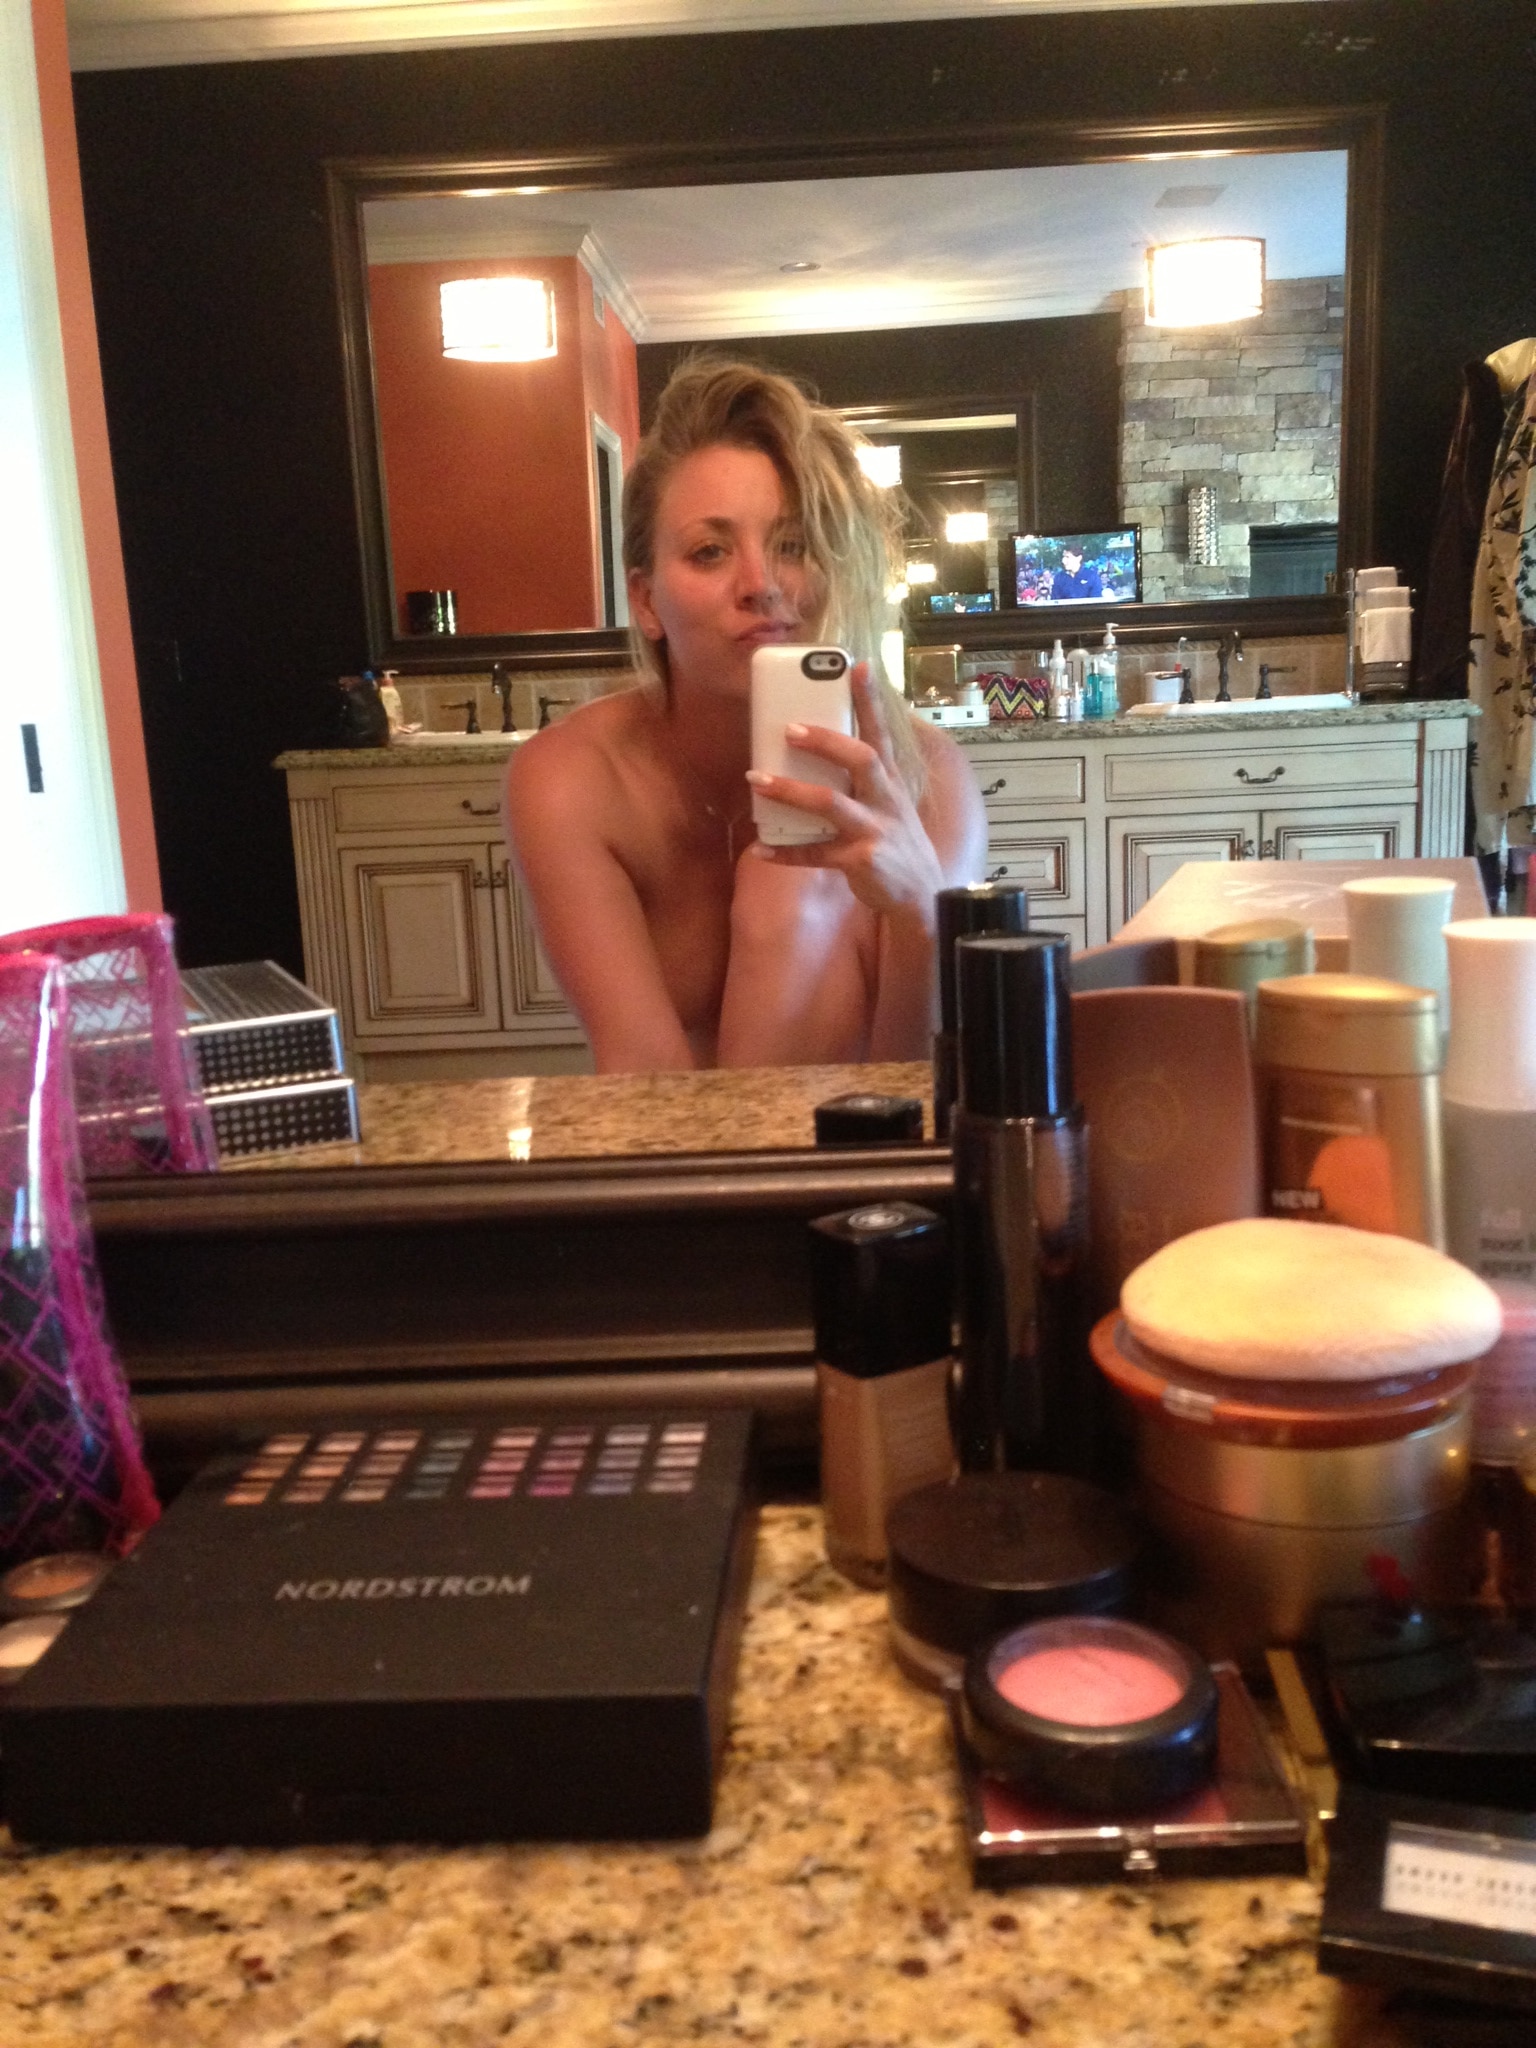 Kaley Cuoco naked in mirror taking selfie